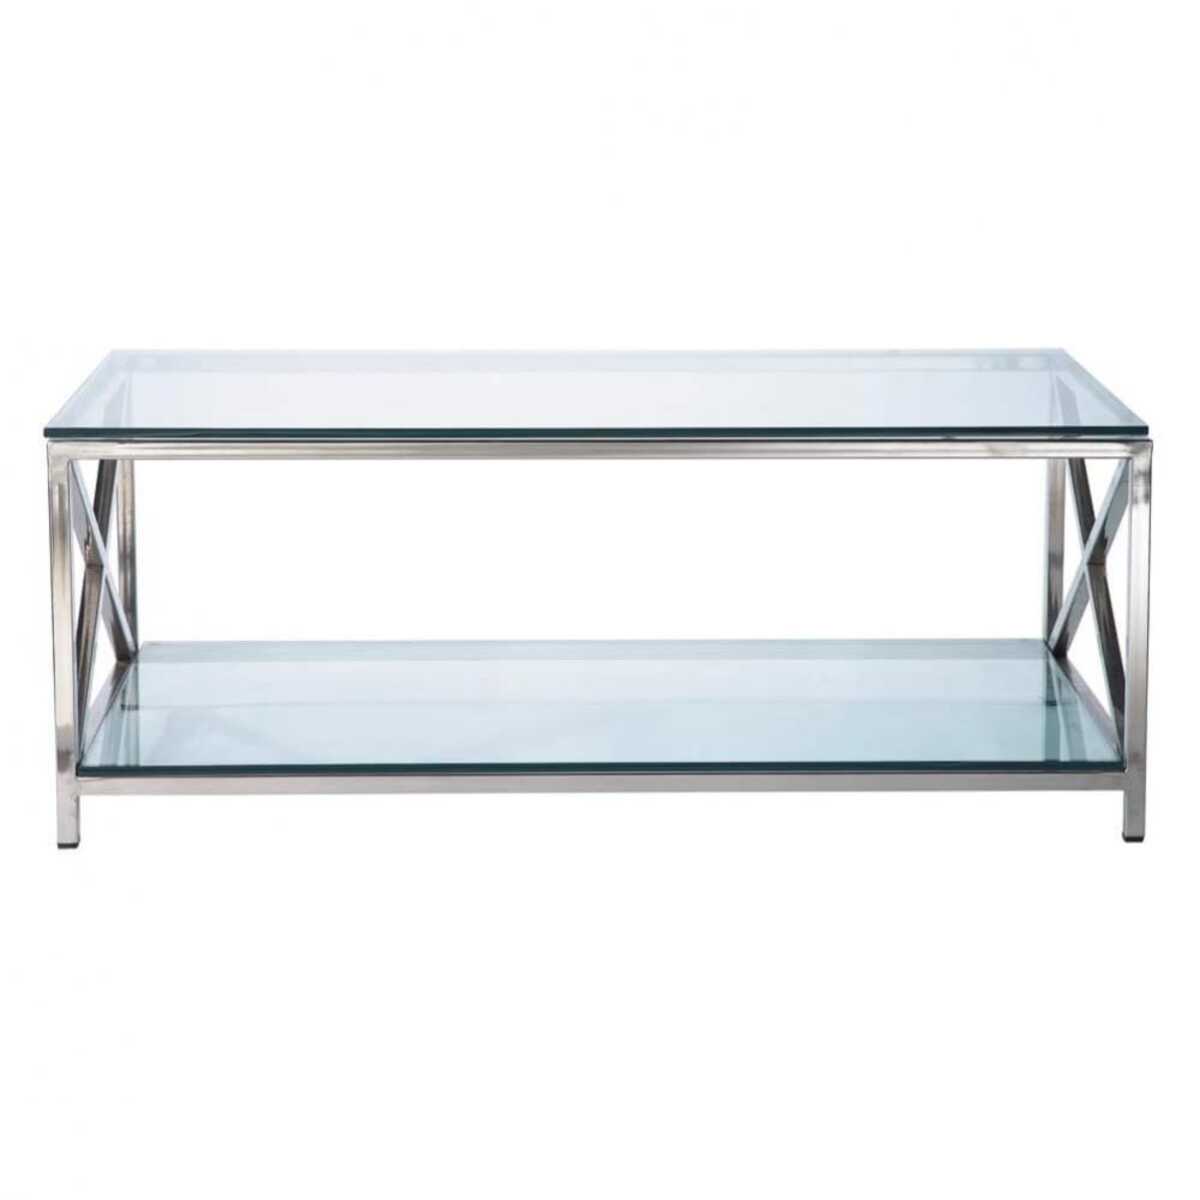 Table basse en verre et métal L 110 cm Helsinki